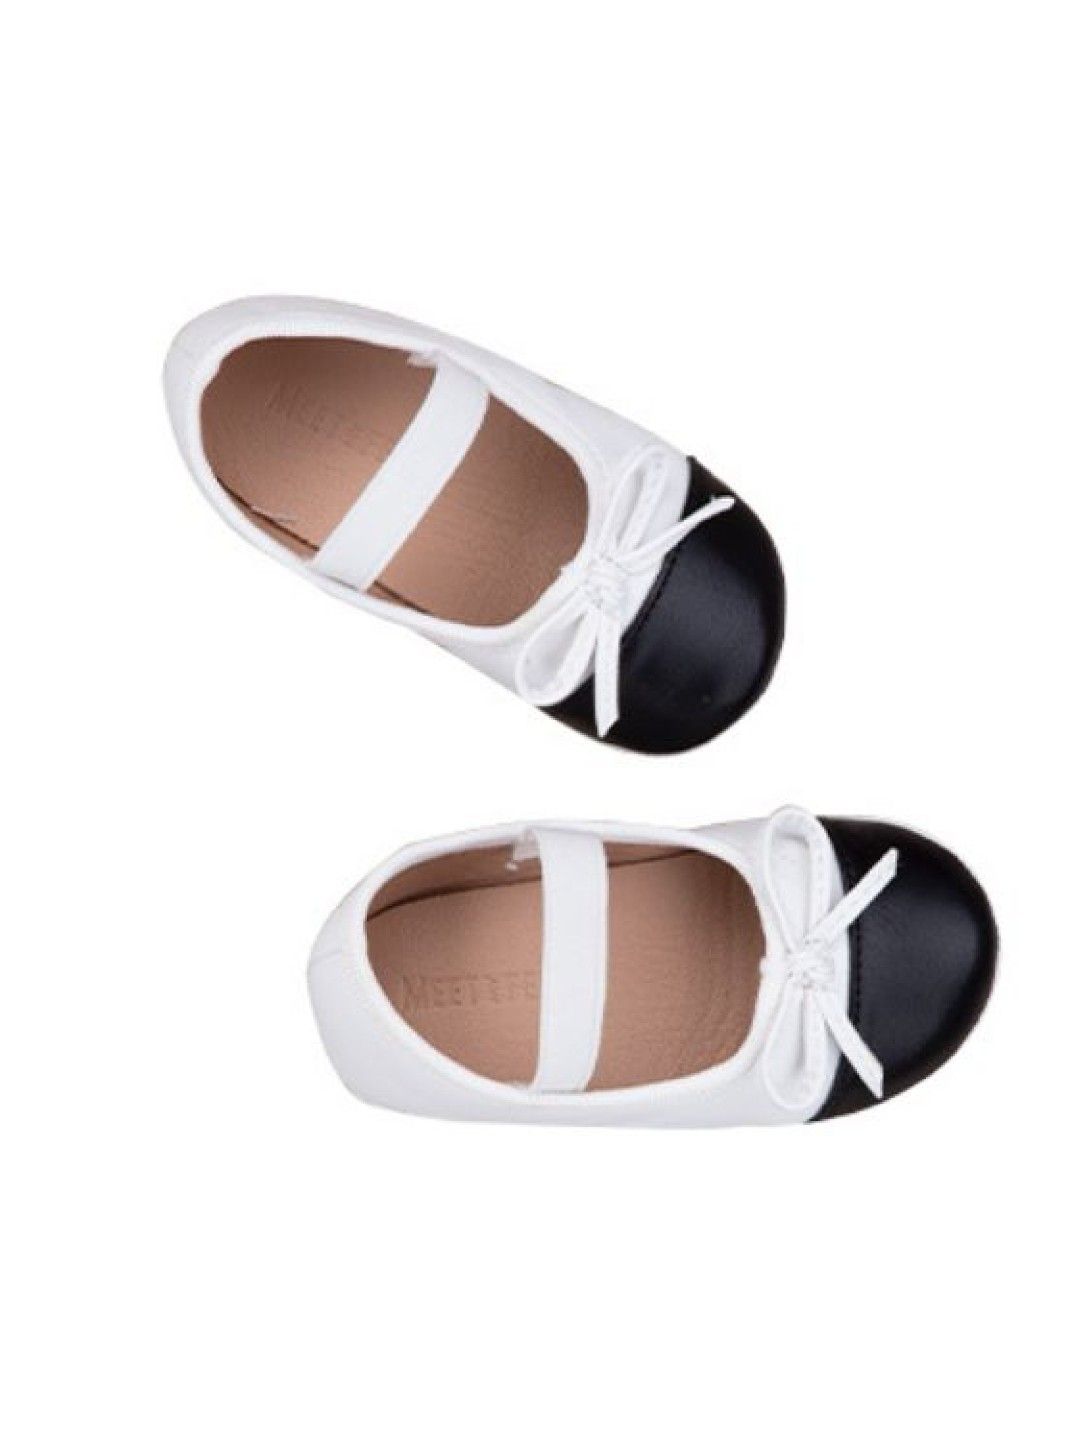 Meet My Feet Tai - Infant Maryjanes or Ballerina Flats For Girls (White/Black- Image 2)